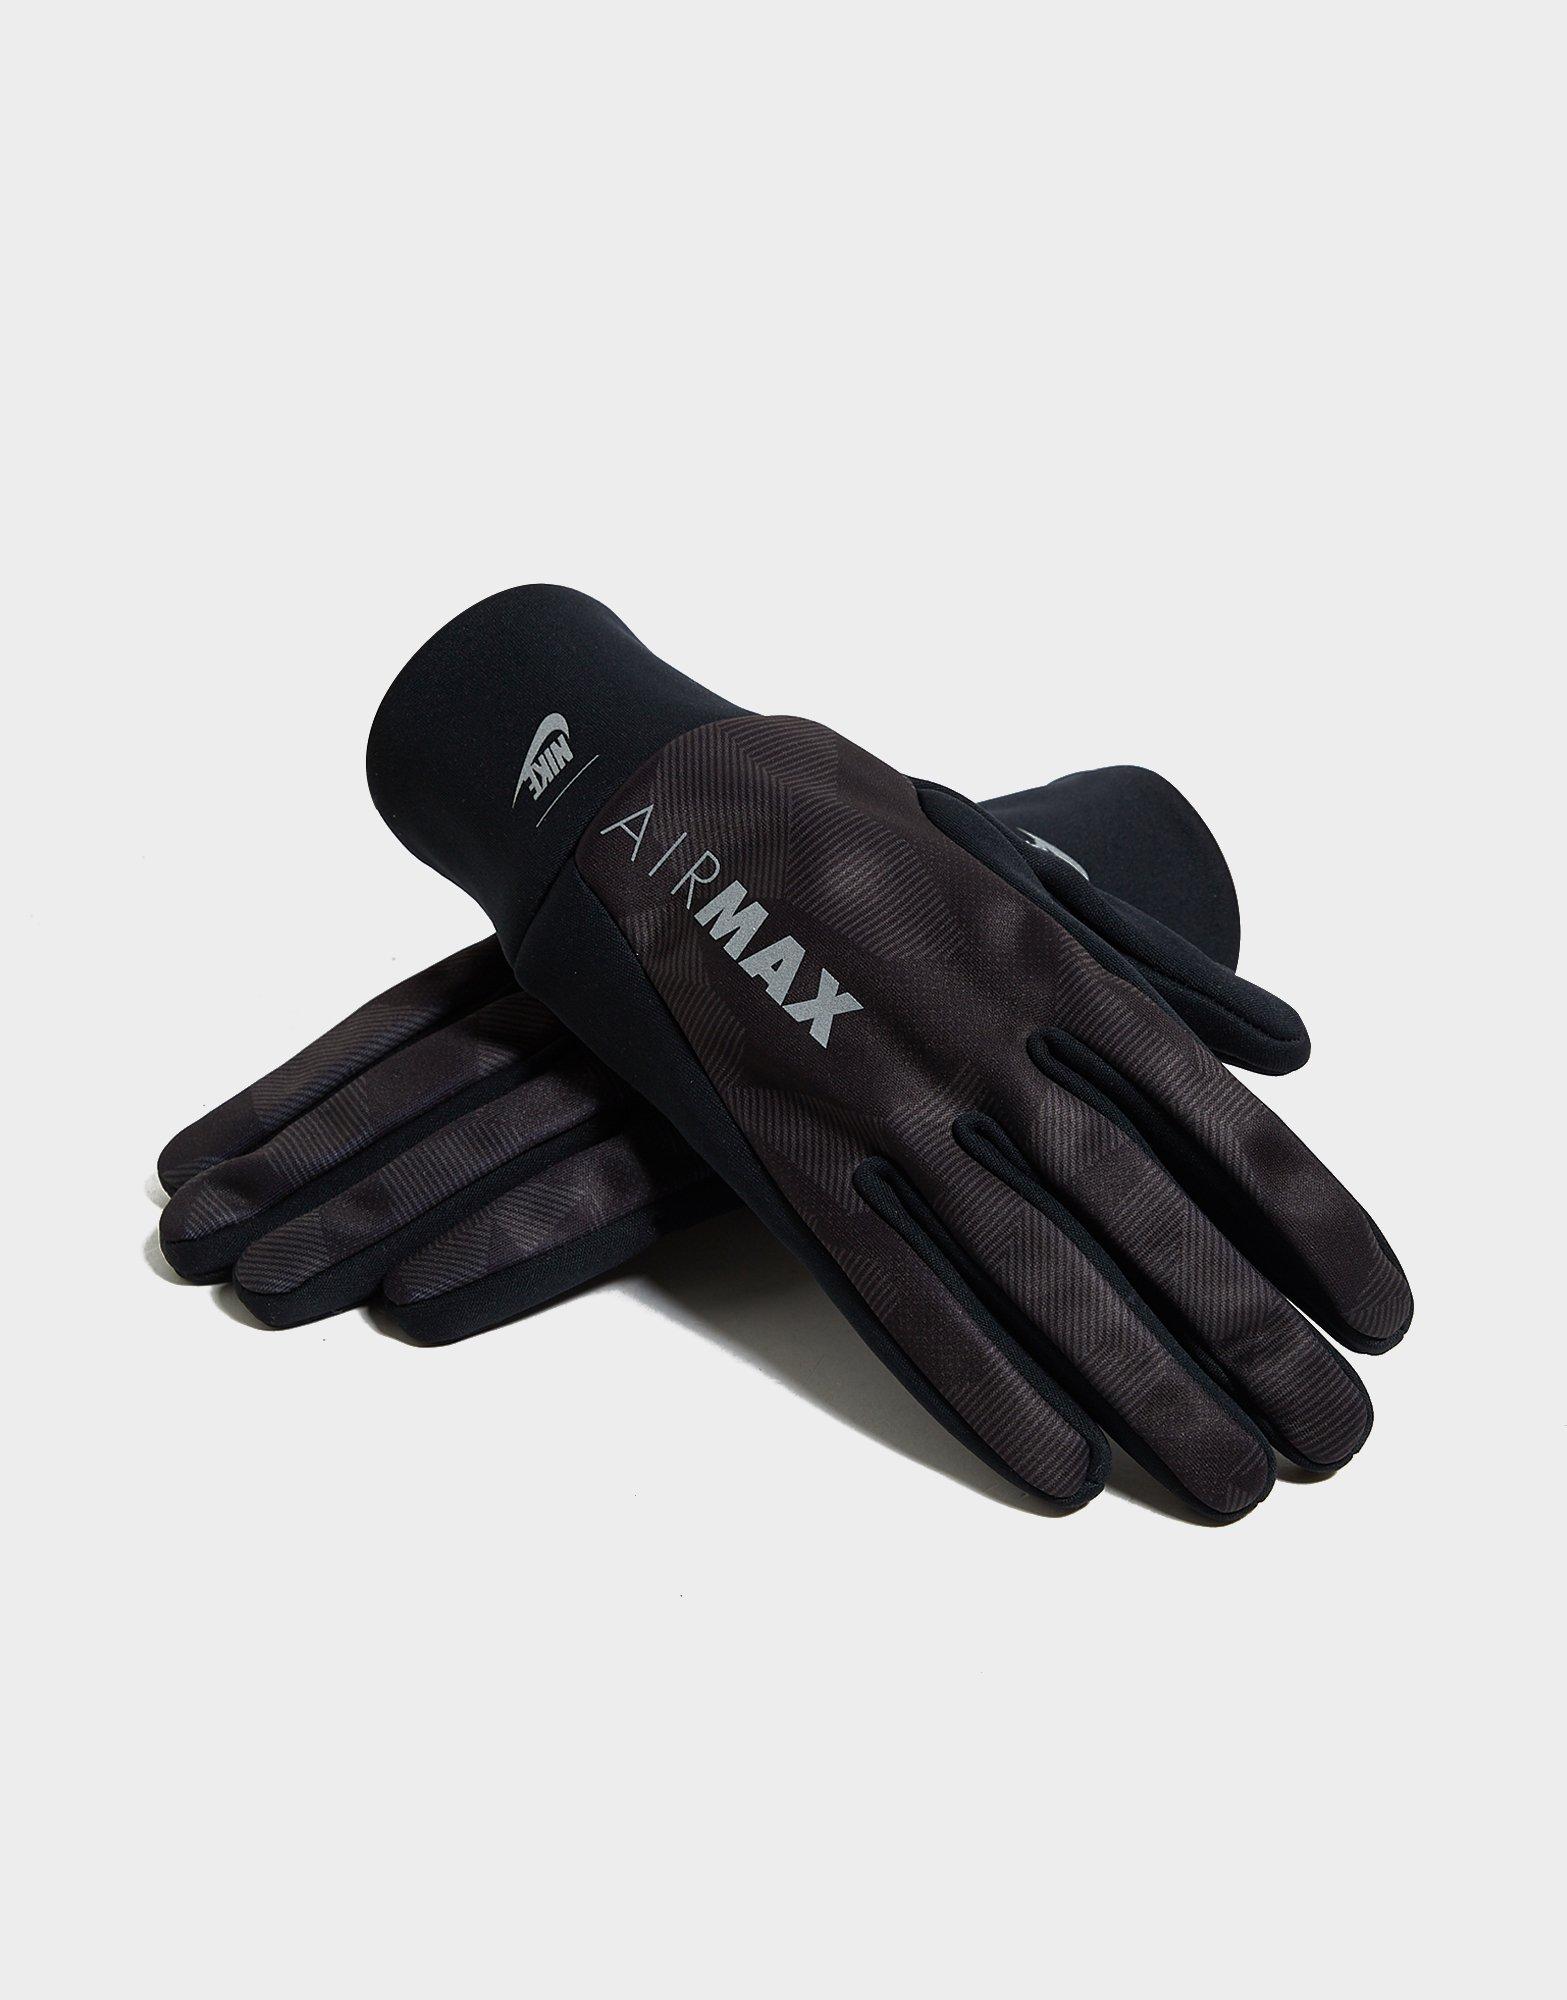 nike vapormax gloves